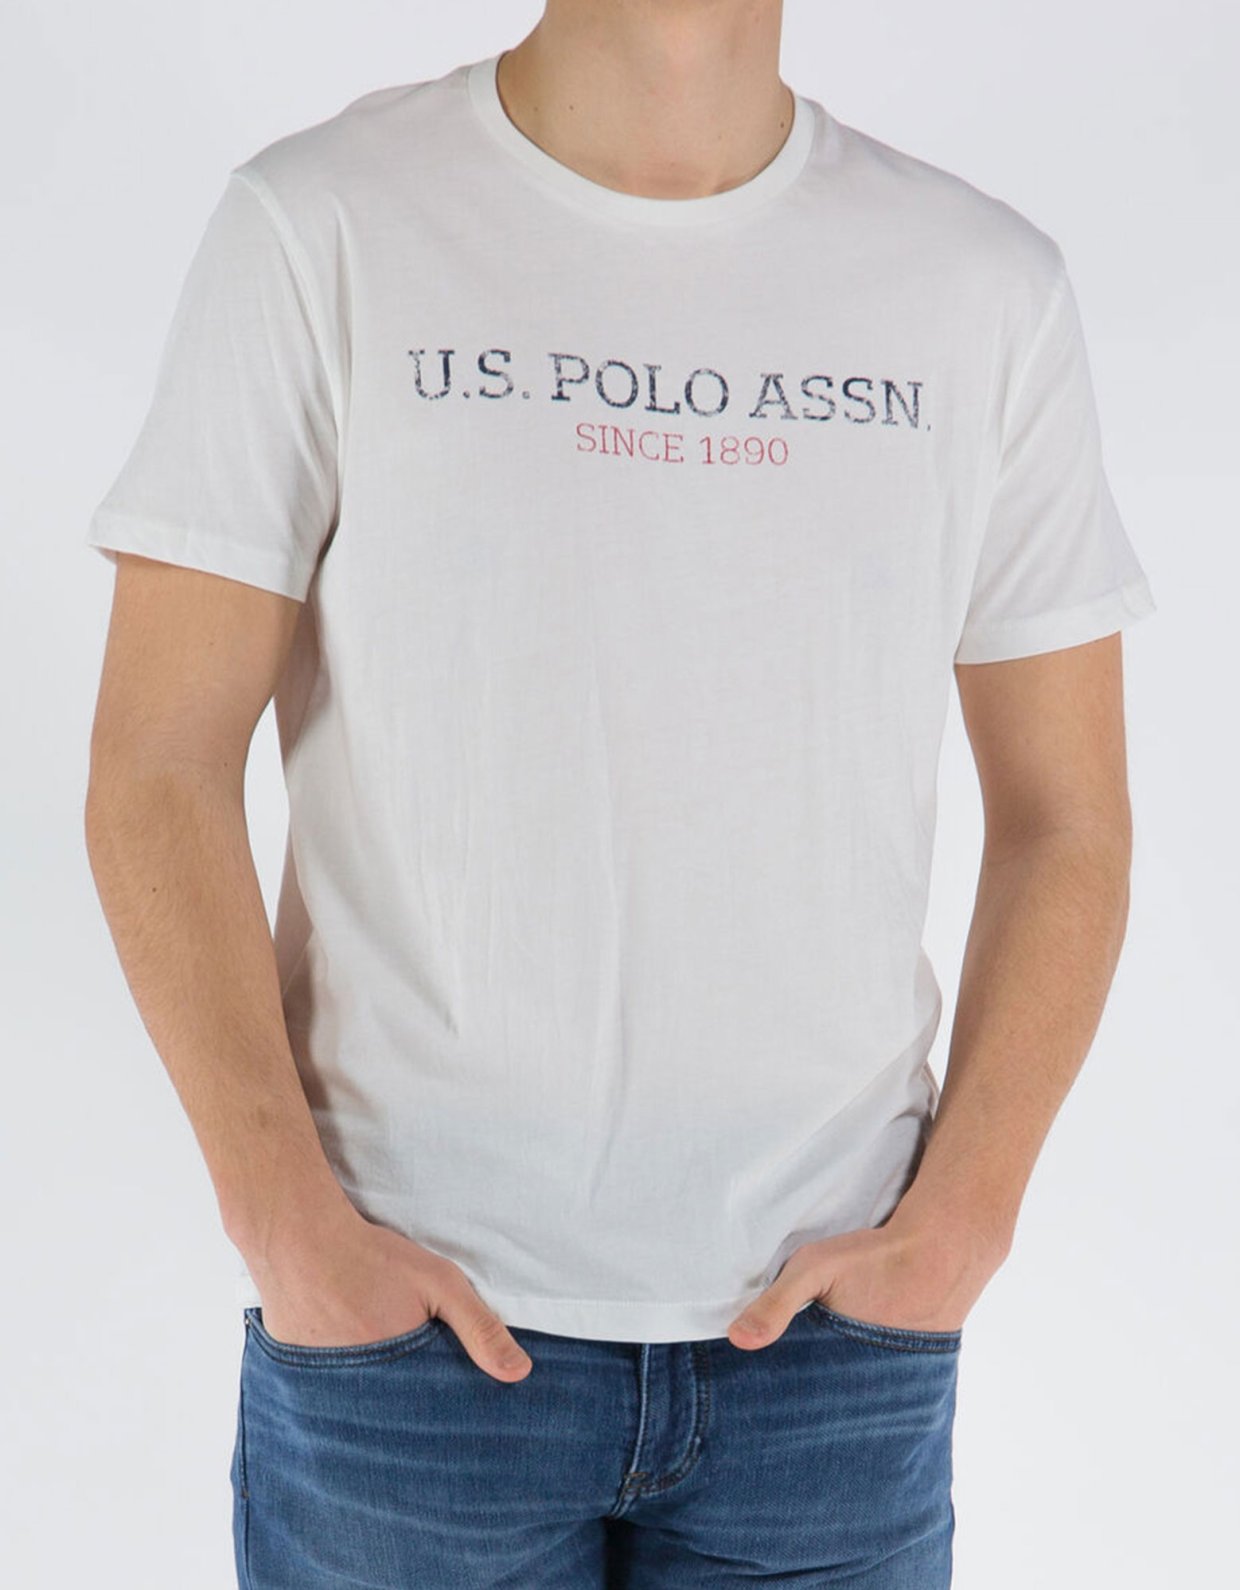 U.S Polo ASSN Mick t-shirt white